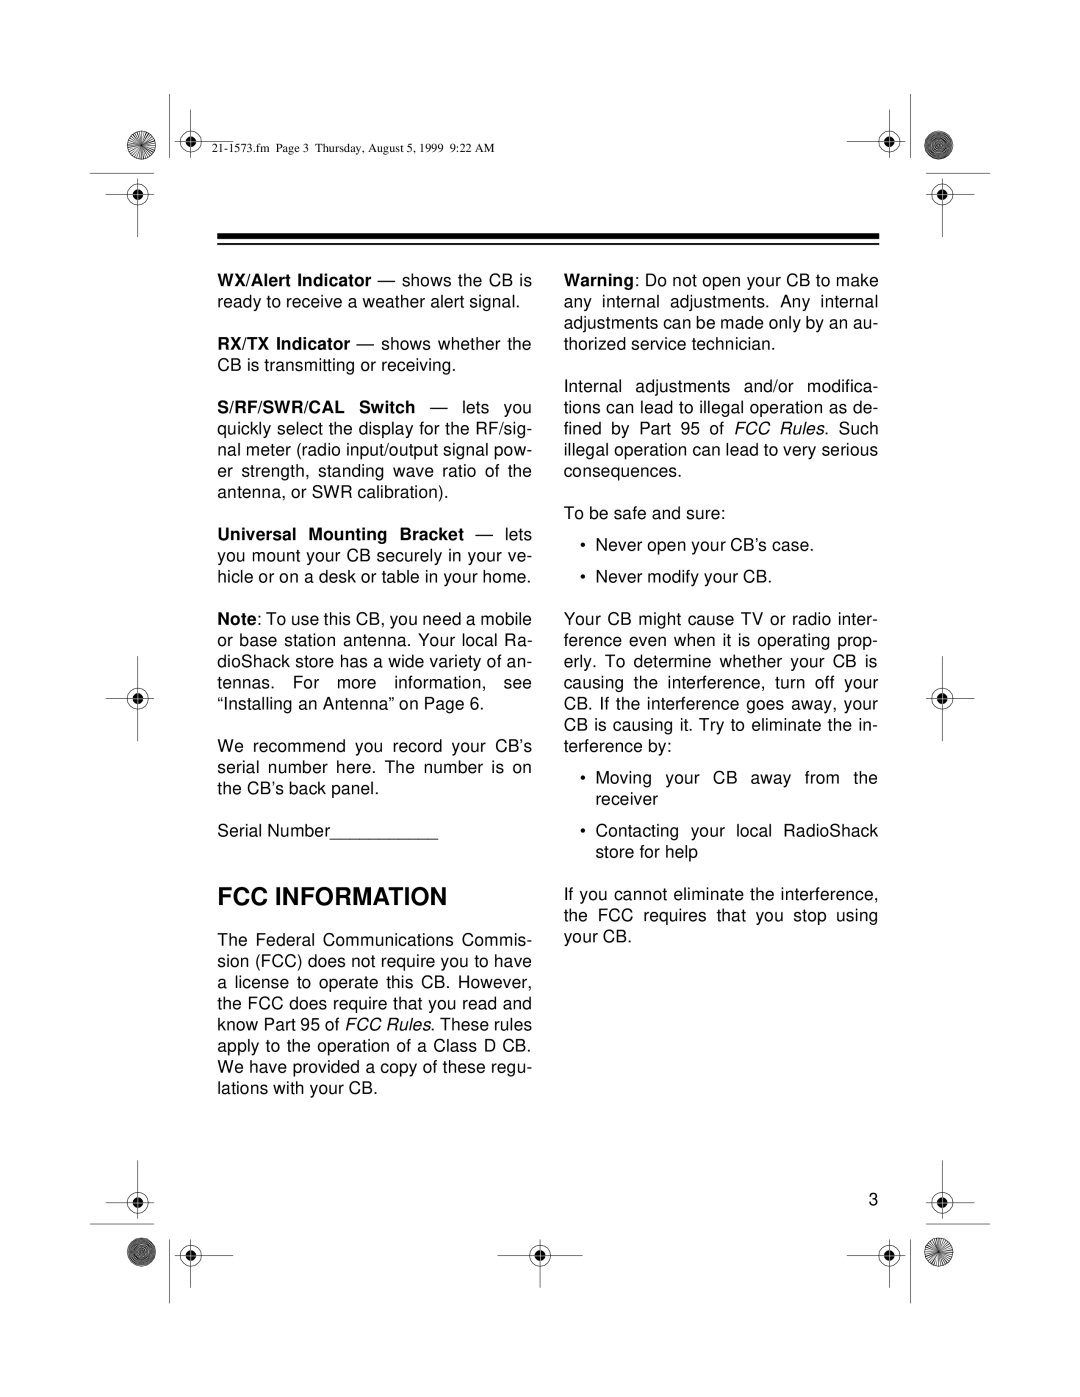 Samsung TRC-445 owner manual Fcc Information 